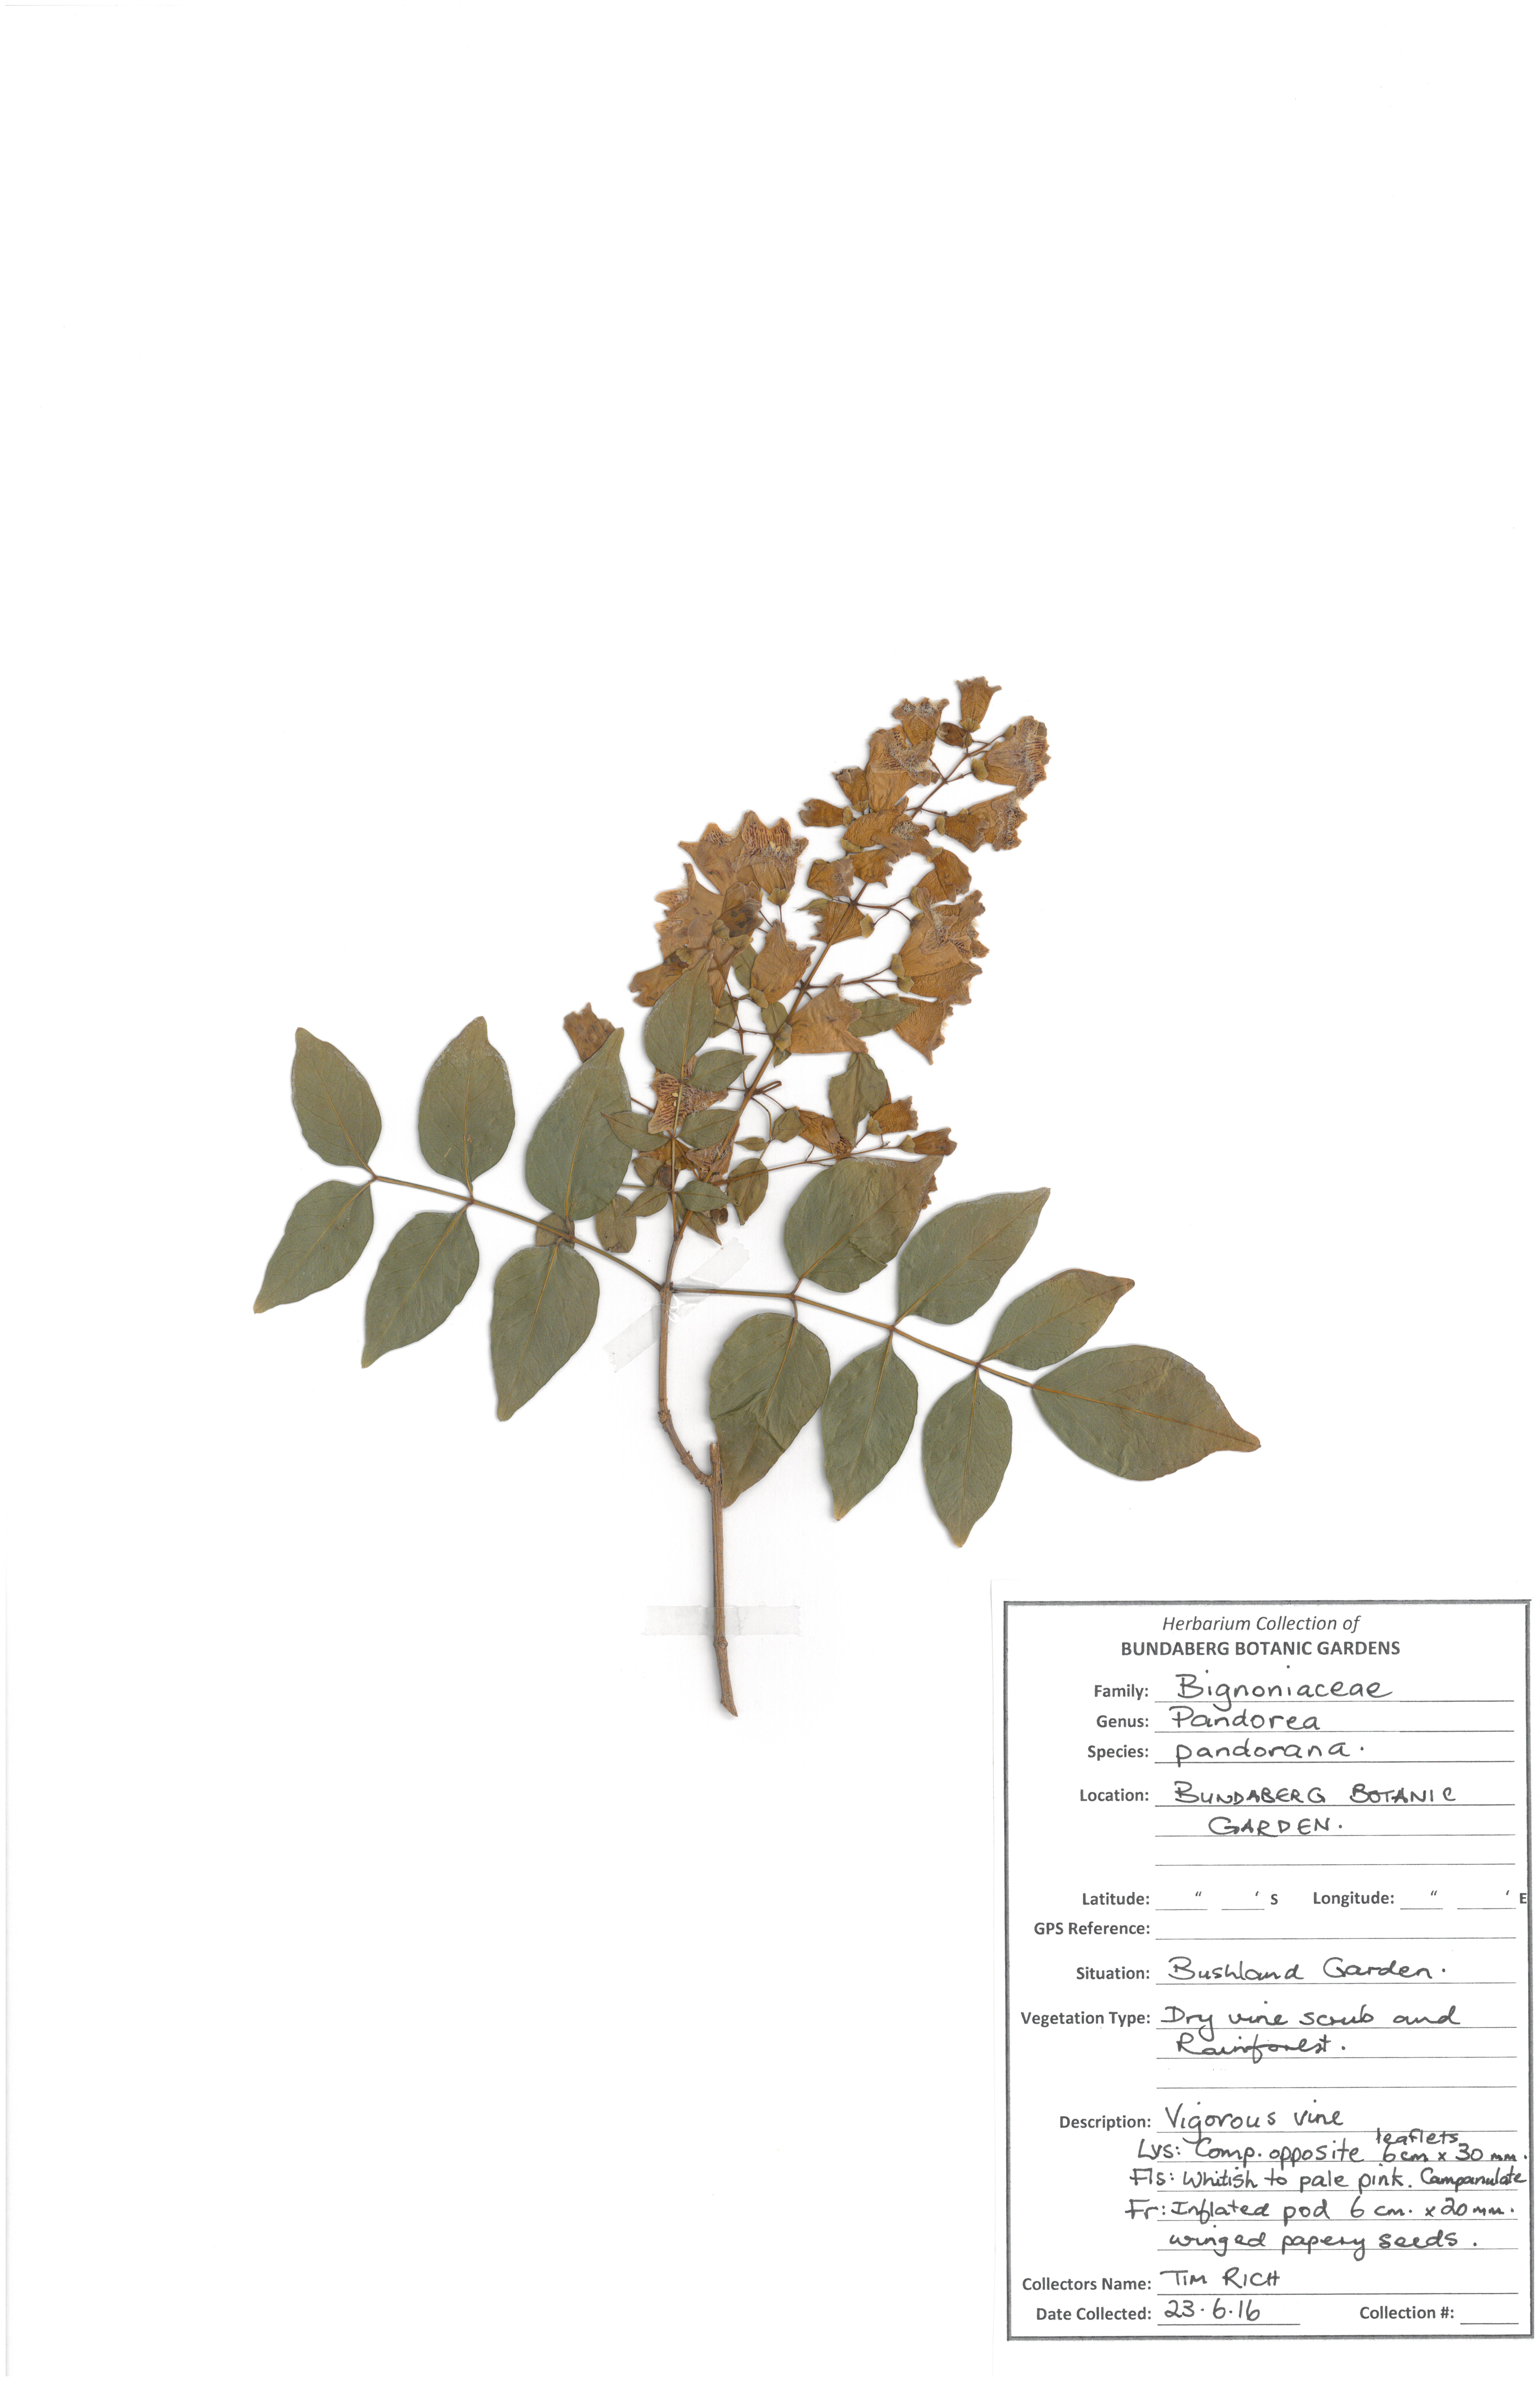 Bignoniaceae pandorea pandorana